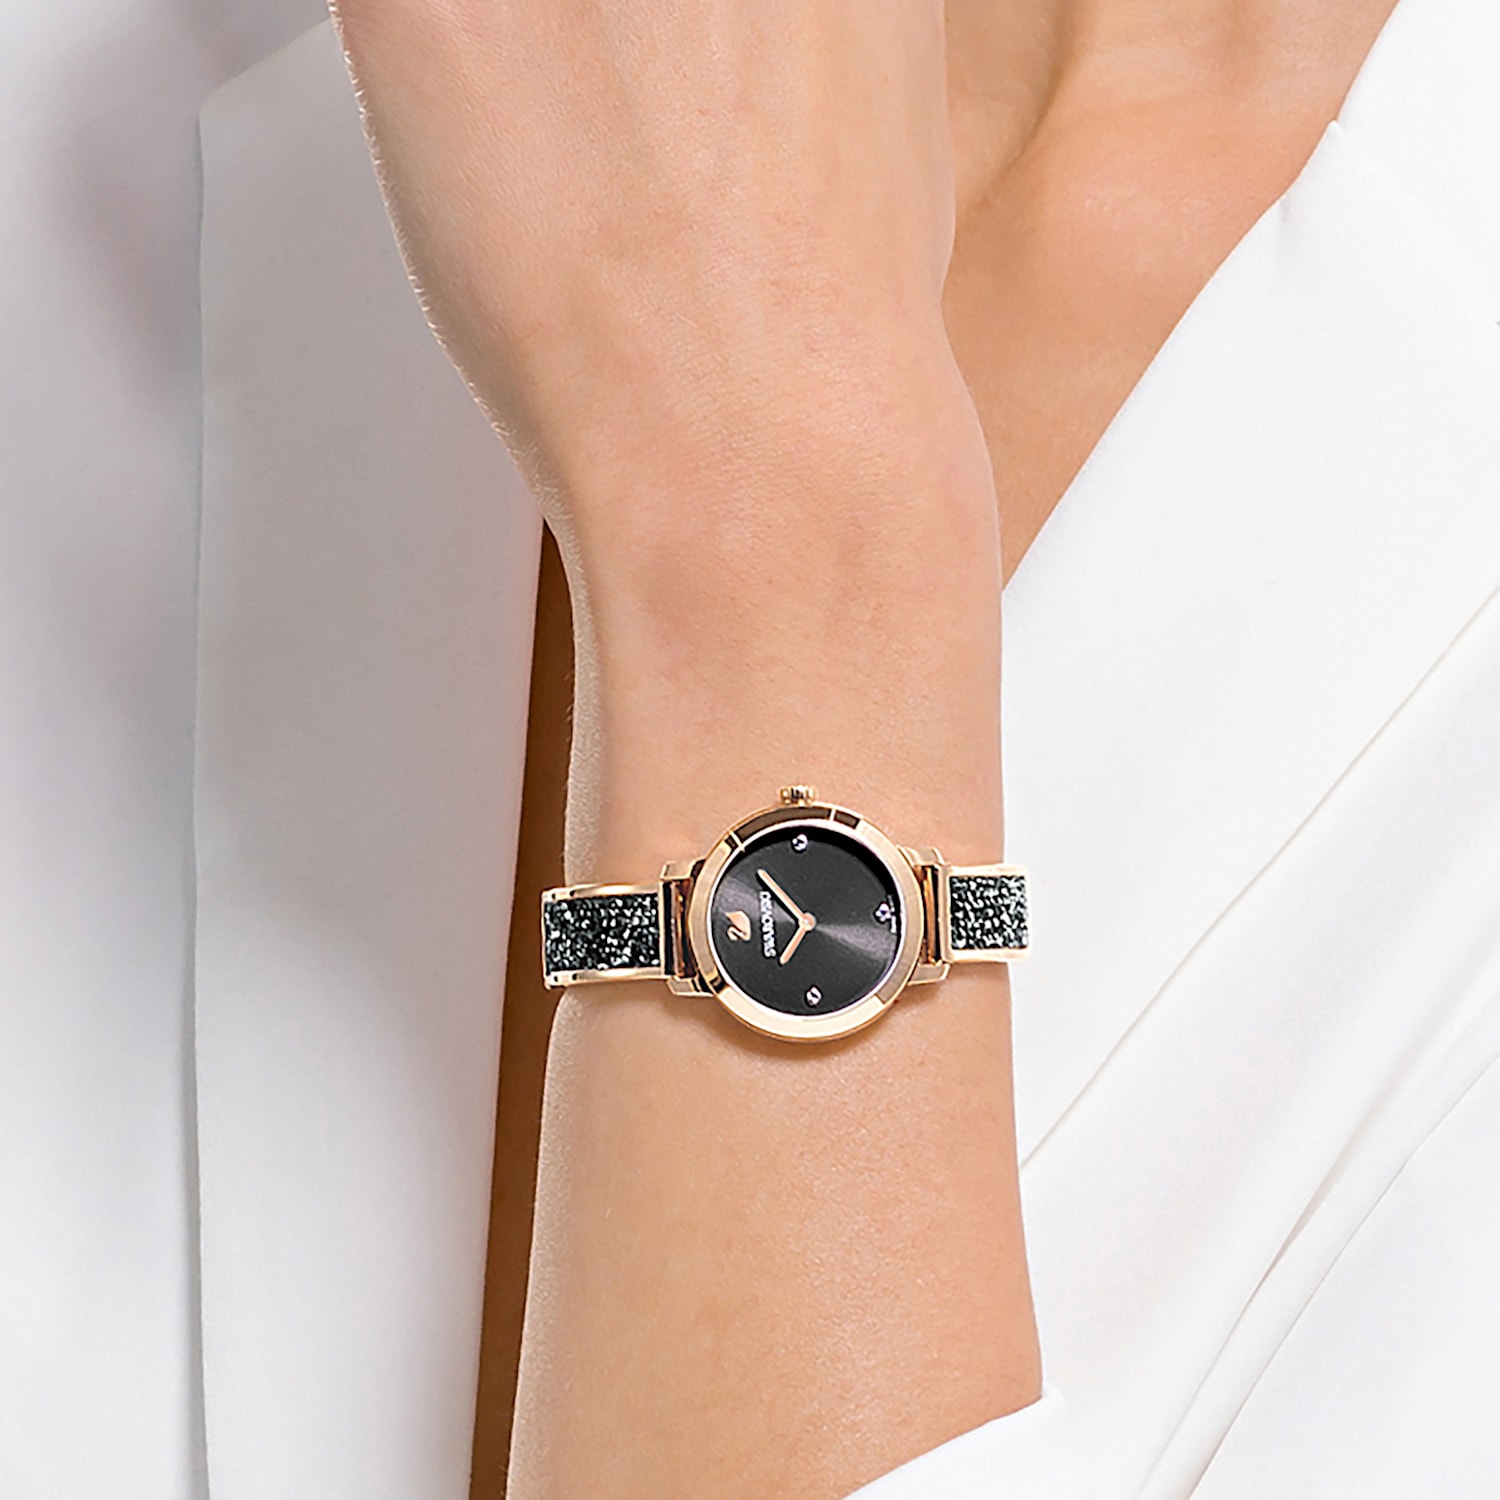 Alegaciones Encogimiento Porque Cosmic Rock watch, Swiss Made, Metal bracelet, Gray, Champagne gold-tone  finish